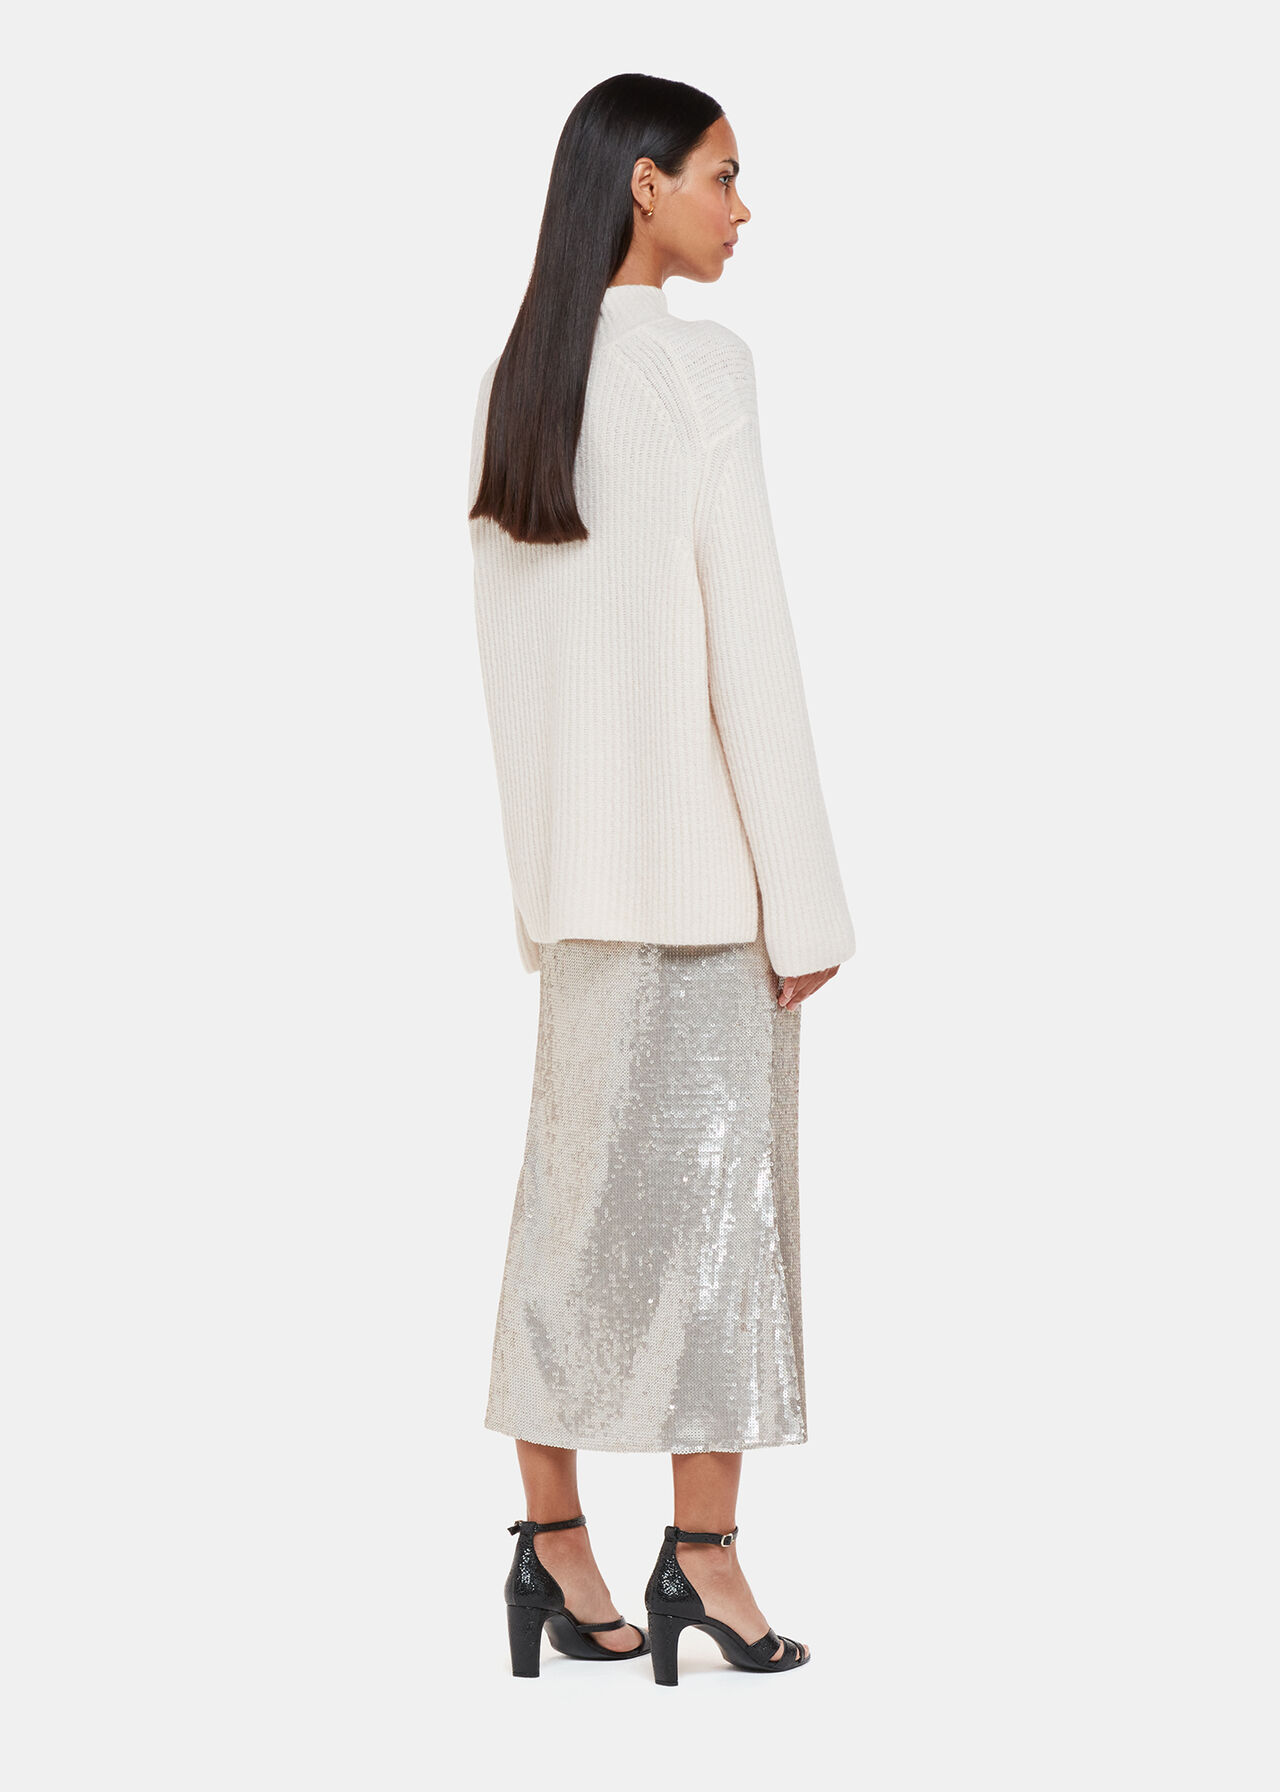 Sequin Midi Skirt